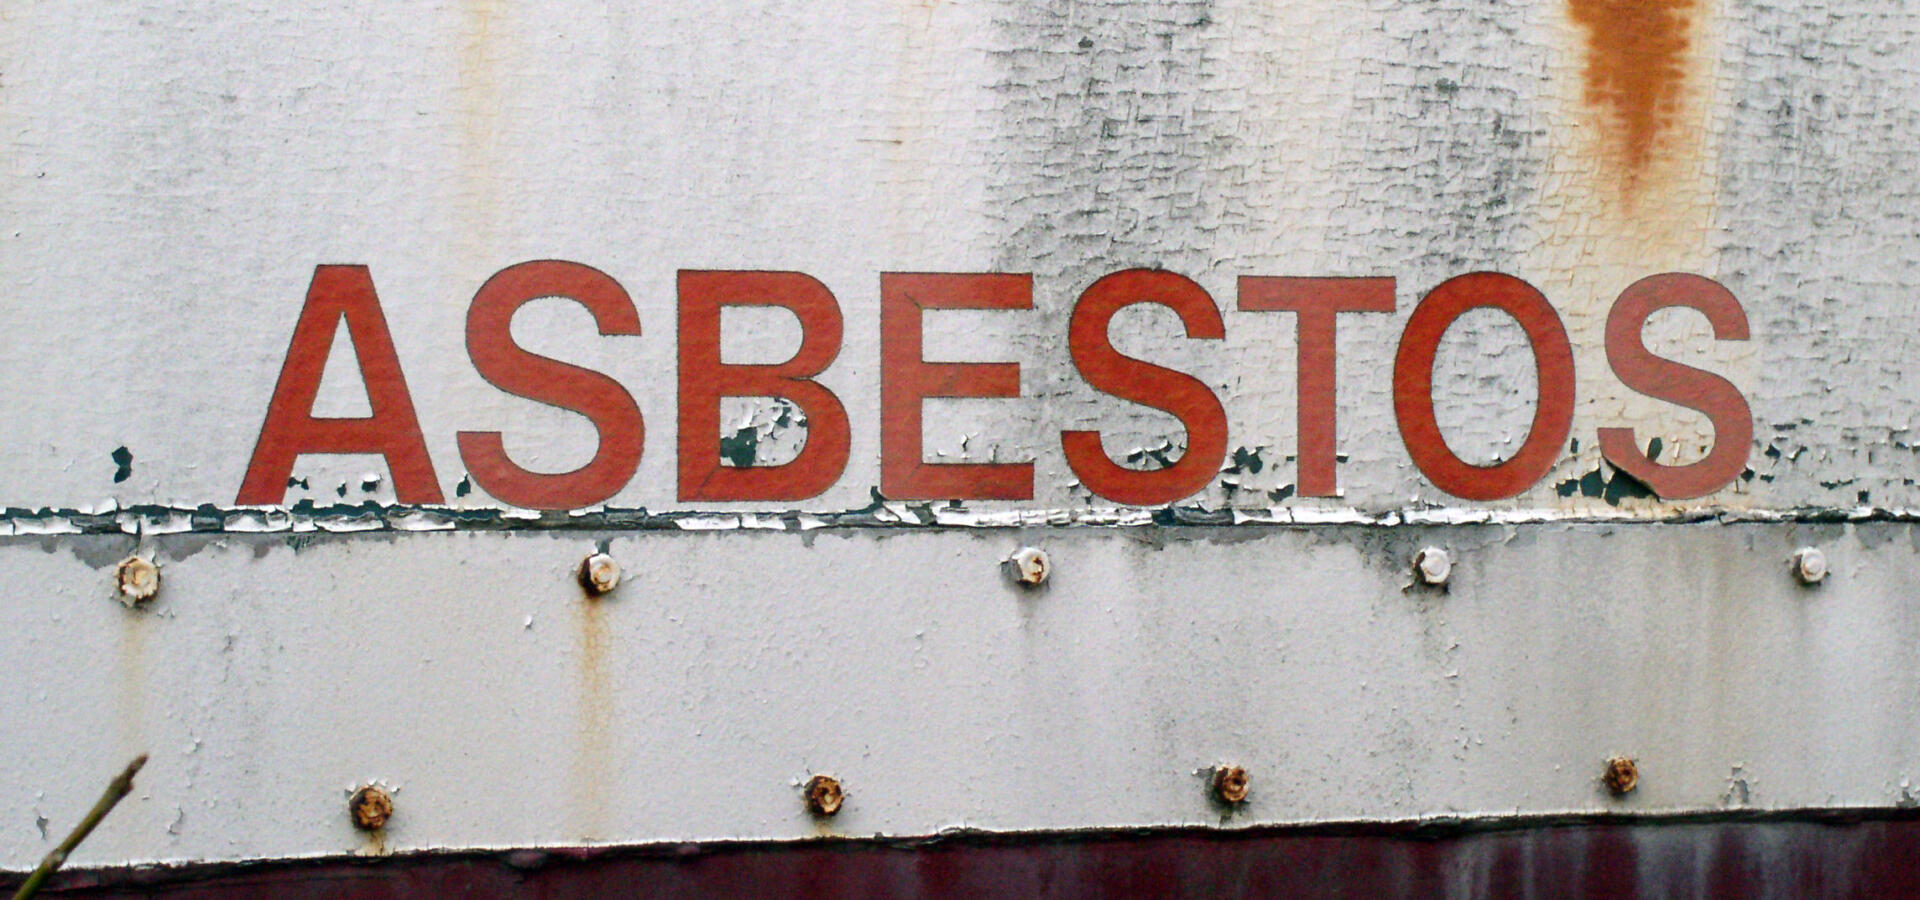 Asbestos warning sign on metal sheets